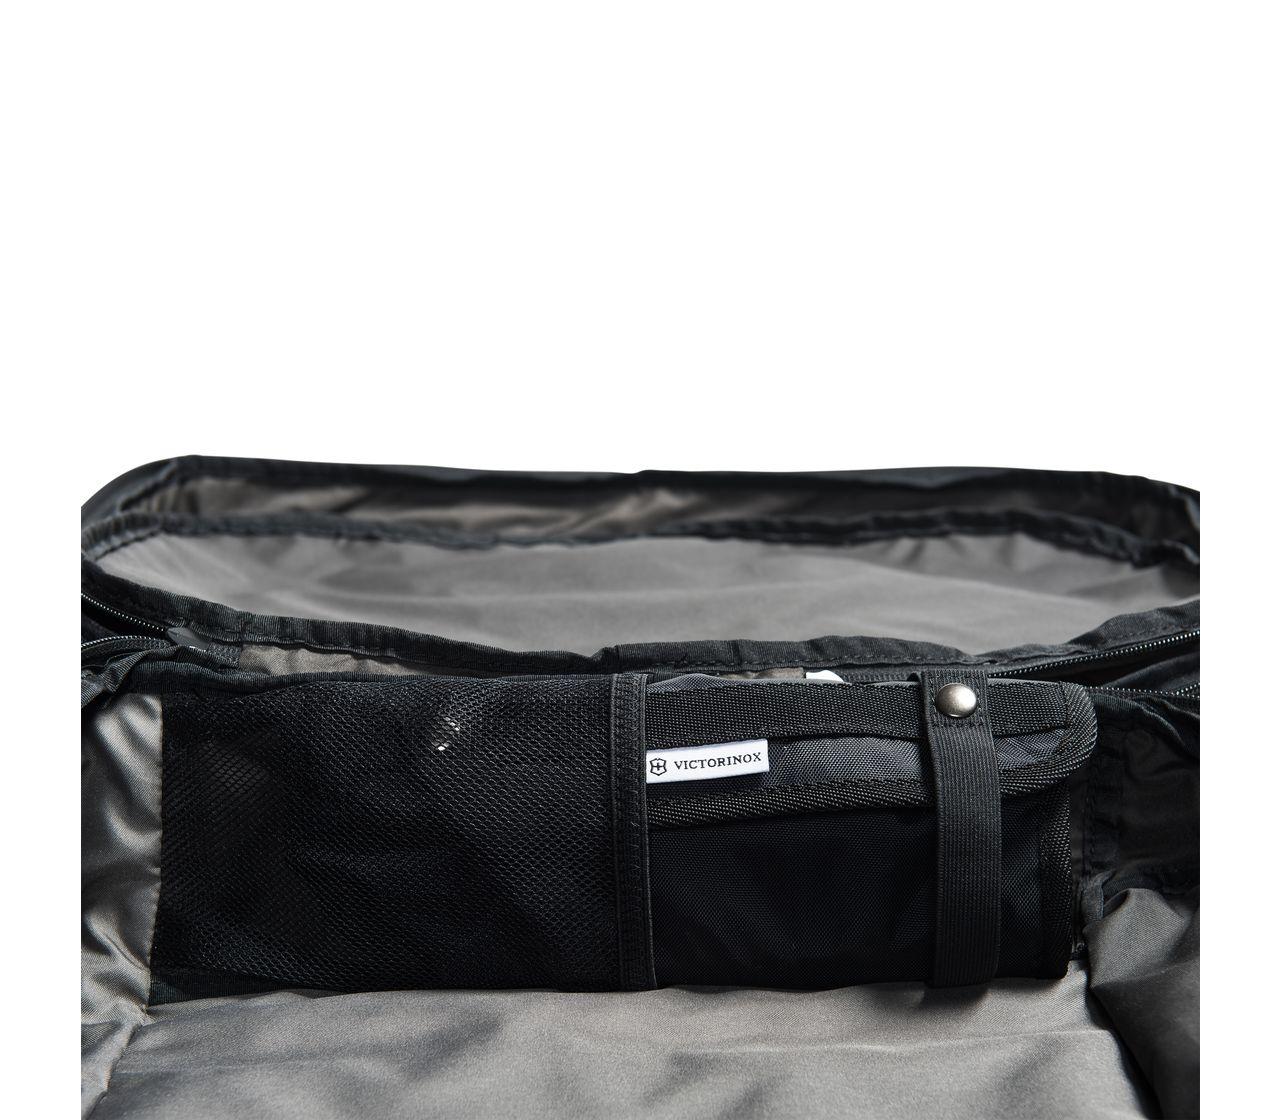 Victorinox Altmont Professional Deluxe Travel Laptop Backpack in black ...